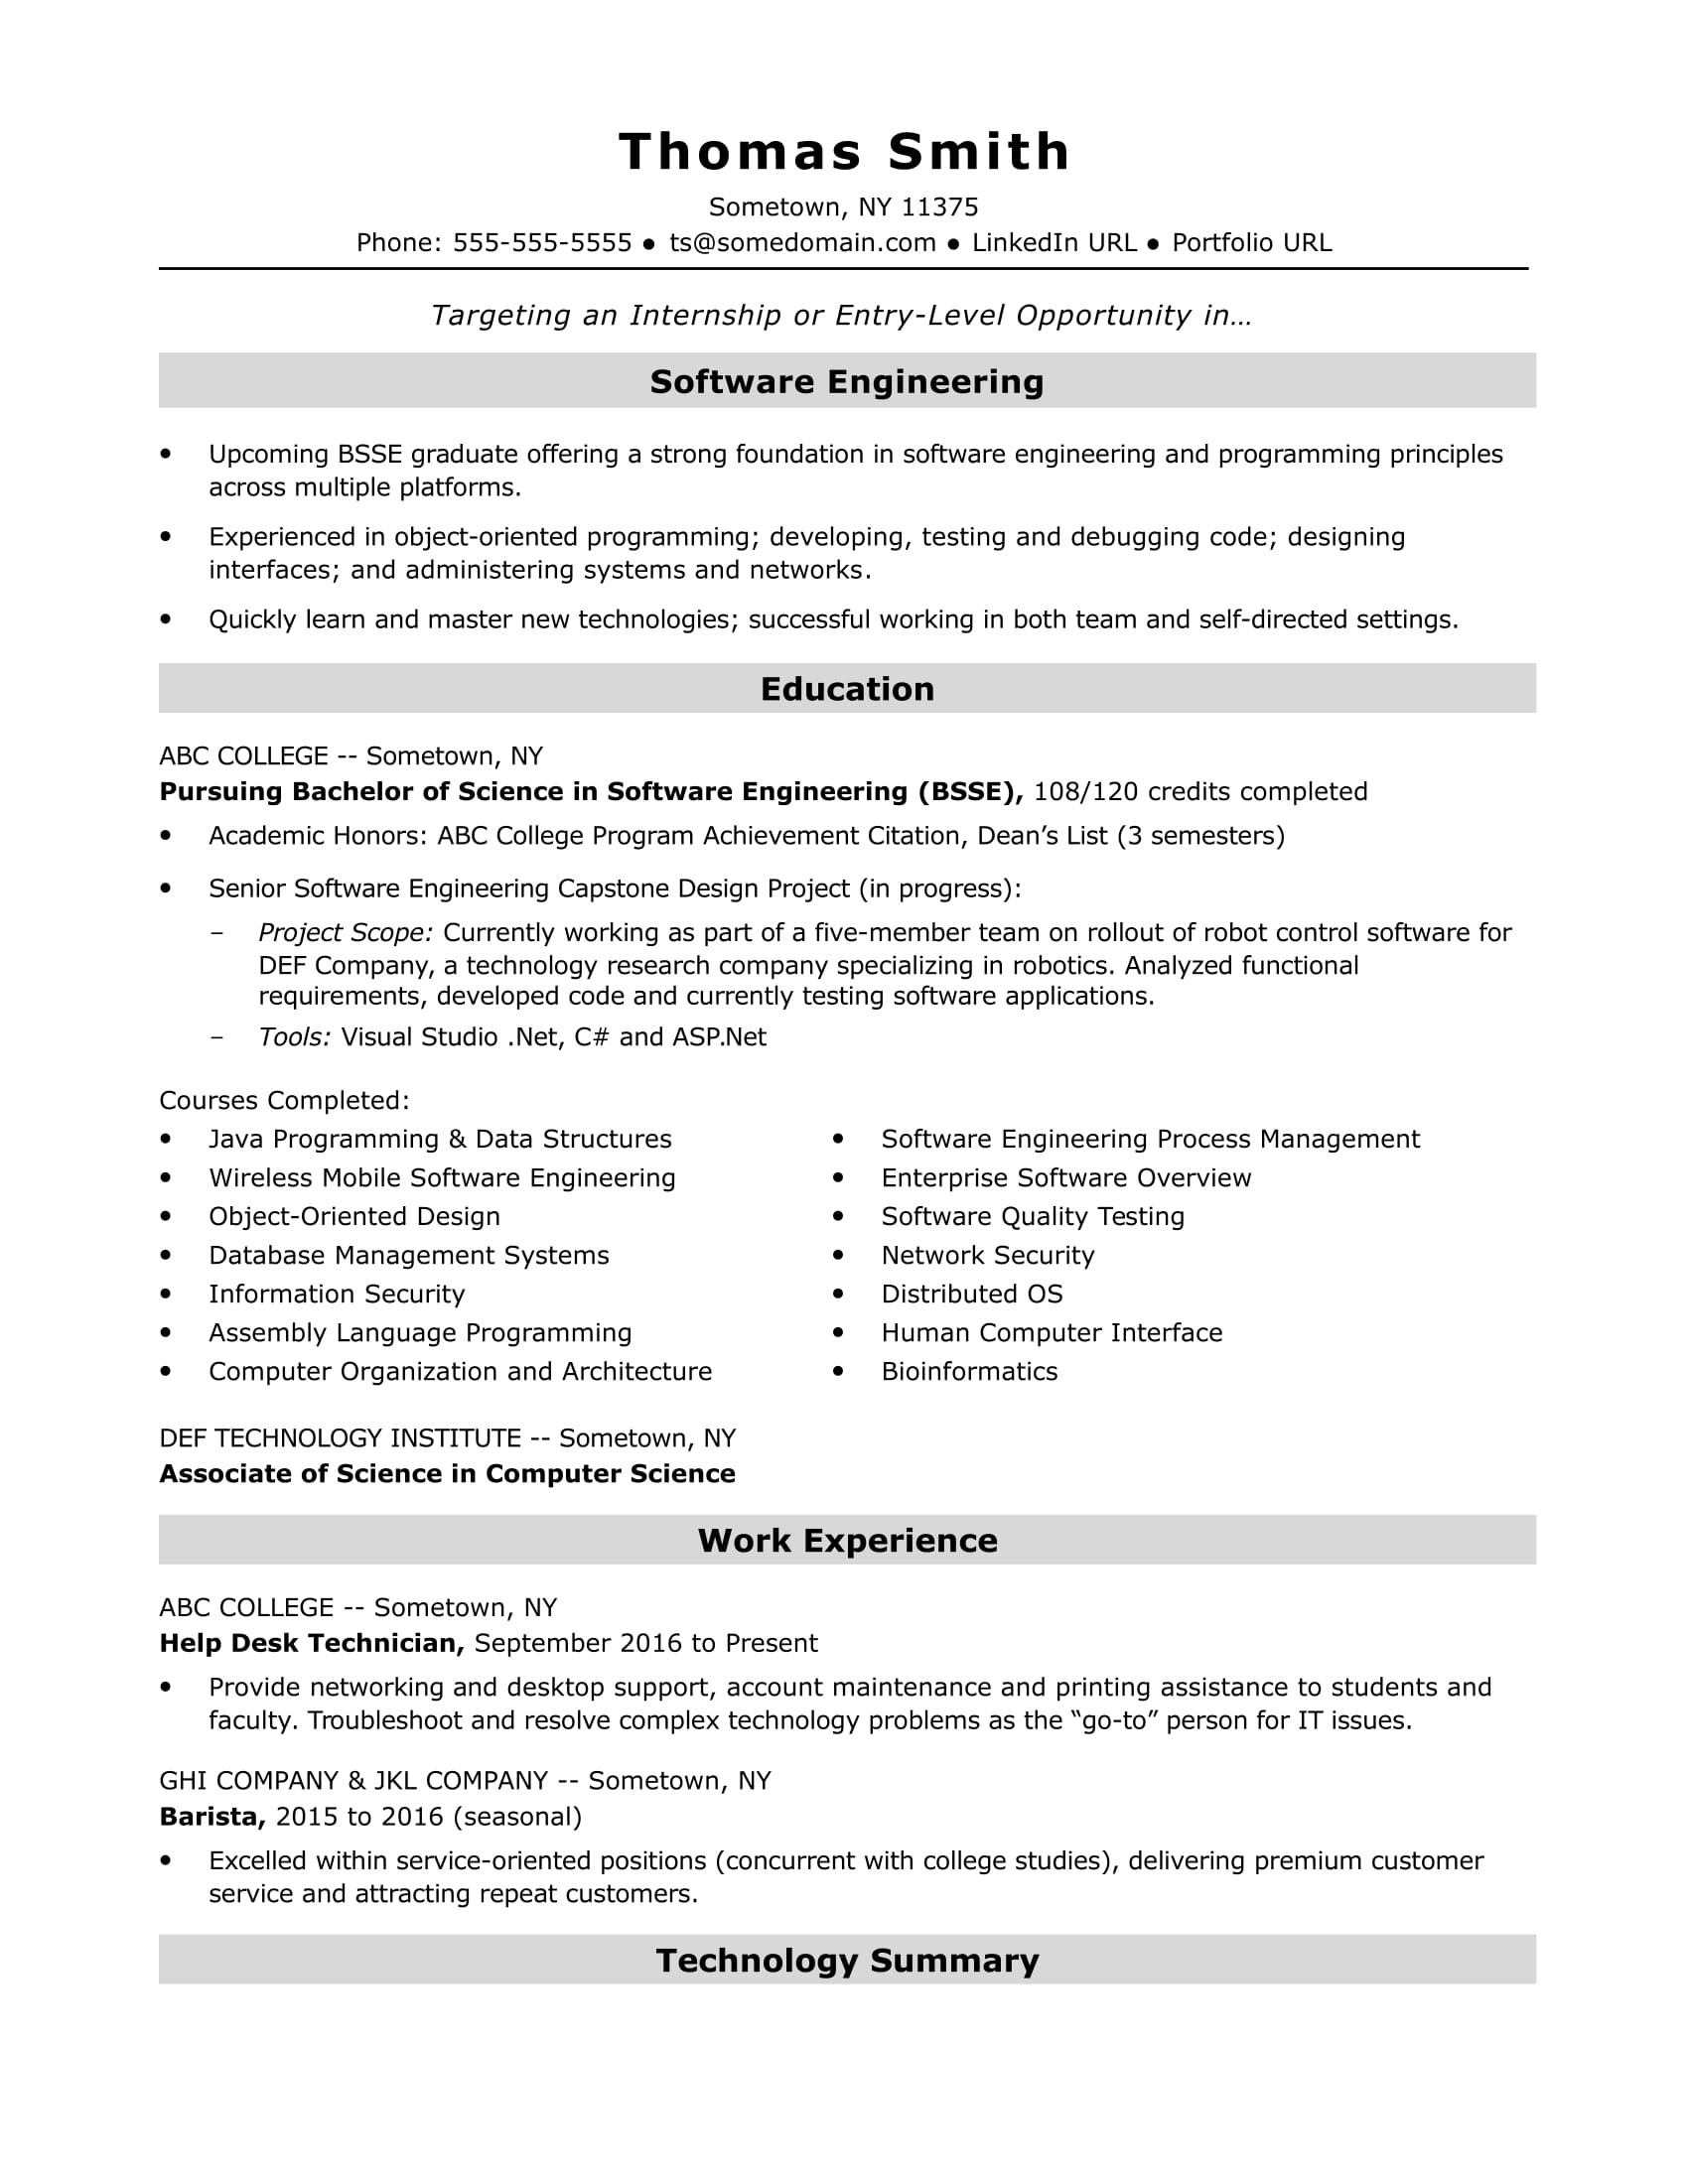 Professional Engineering Resume Samples for Freshers Entry-level software Engineer Resume Sample Monster.com